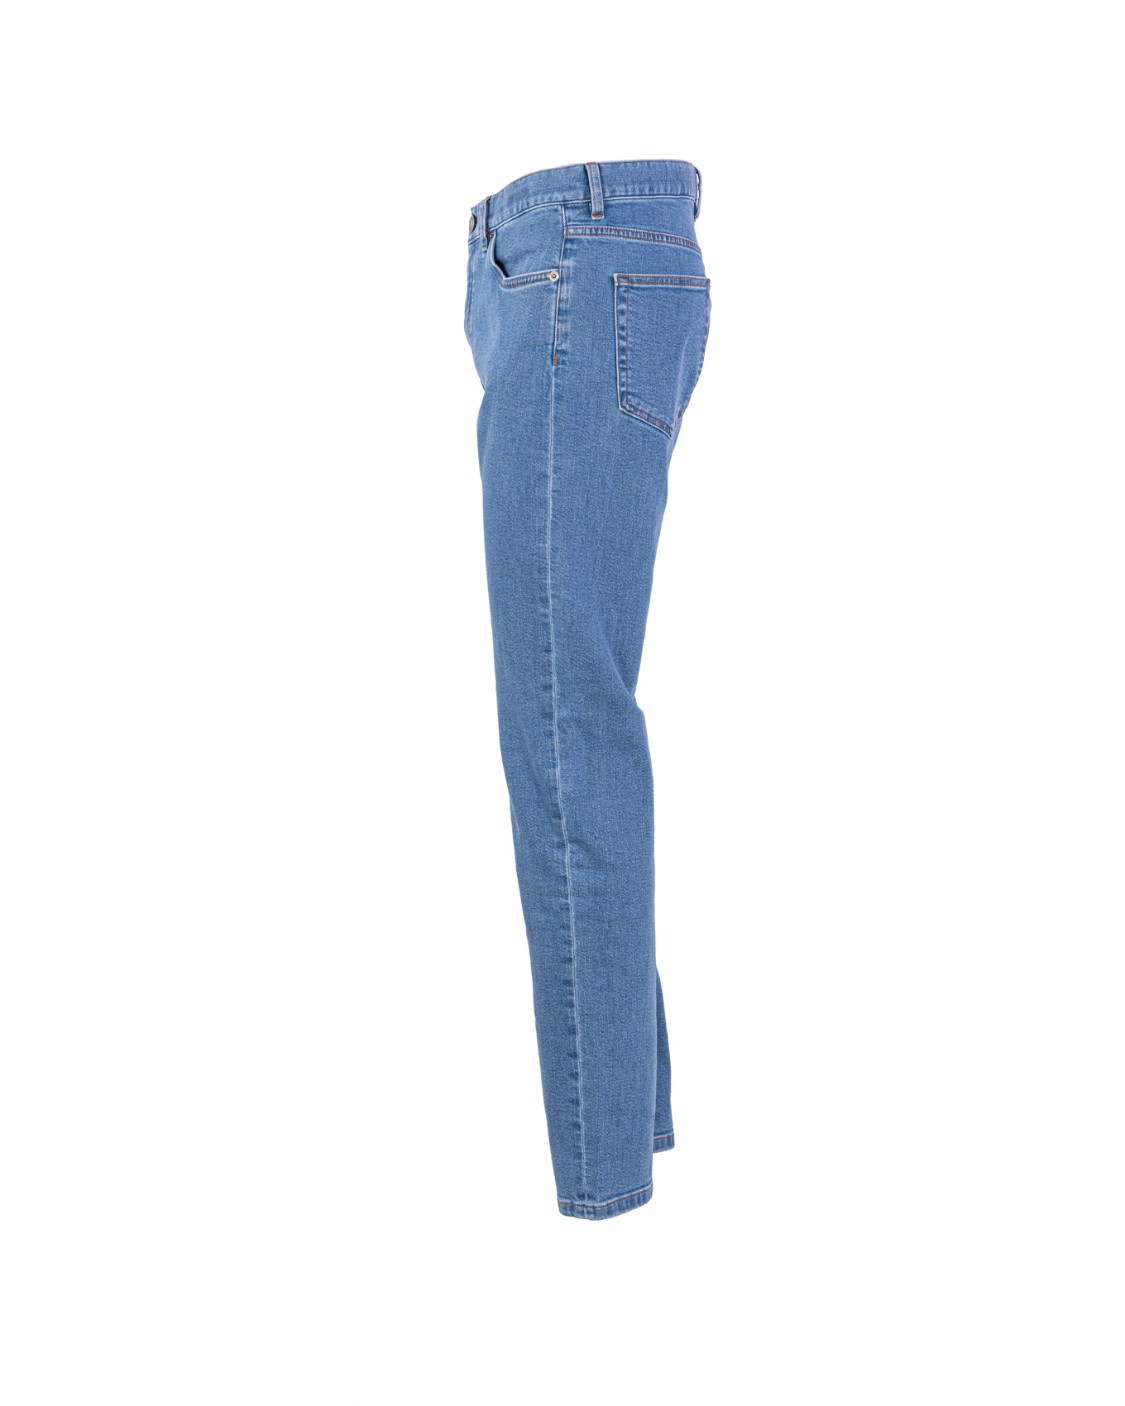 shop ZEGNA Saldi Jeans: Zegna jeans 5 tasche in denim di cotone elasticizzato.
Regular fit.
Composizione: 98% poliestere 2% elastan.
Fabbricato in Romania.. UBI70A5 CITY-003 number 4086930